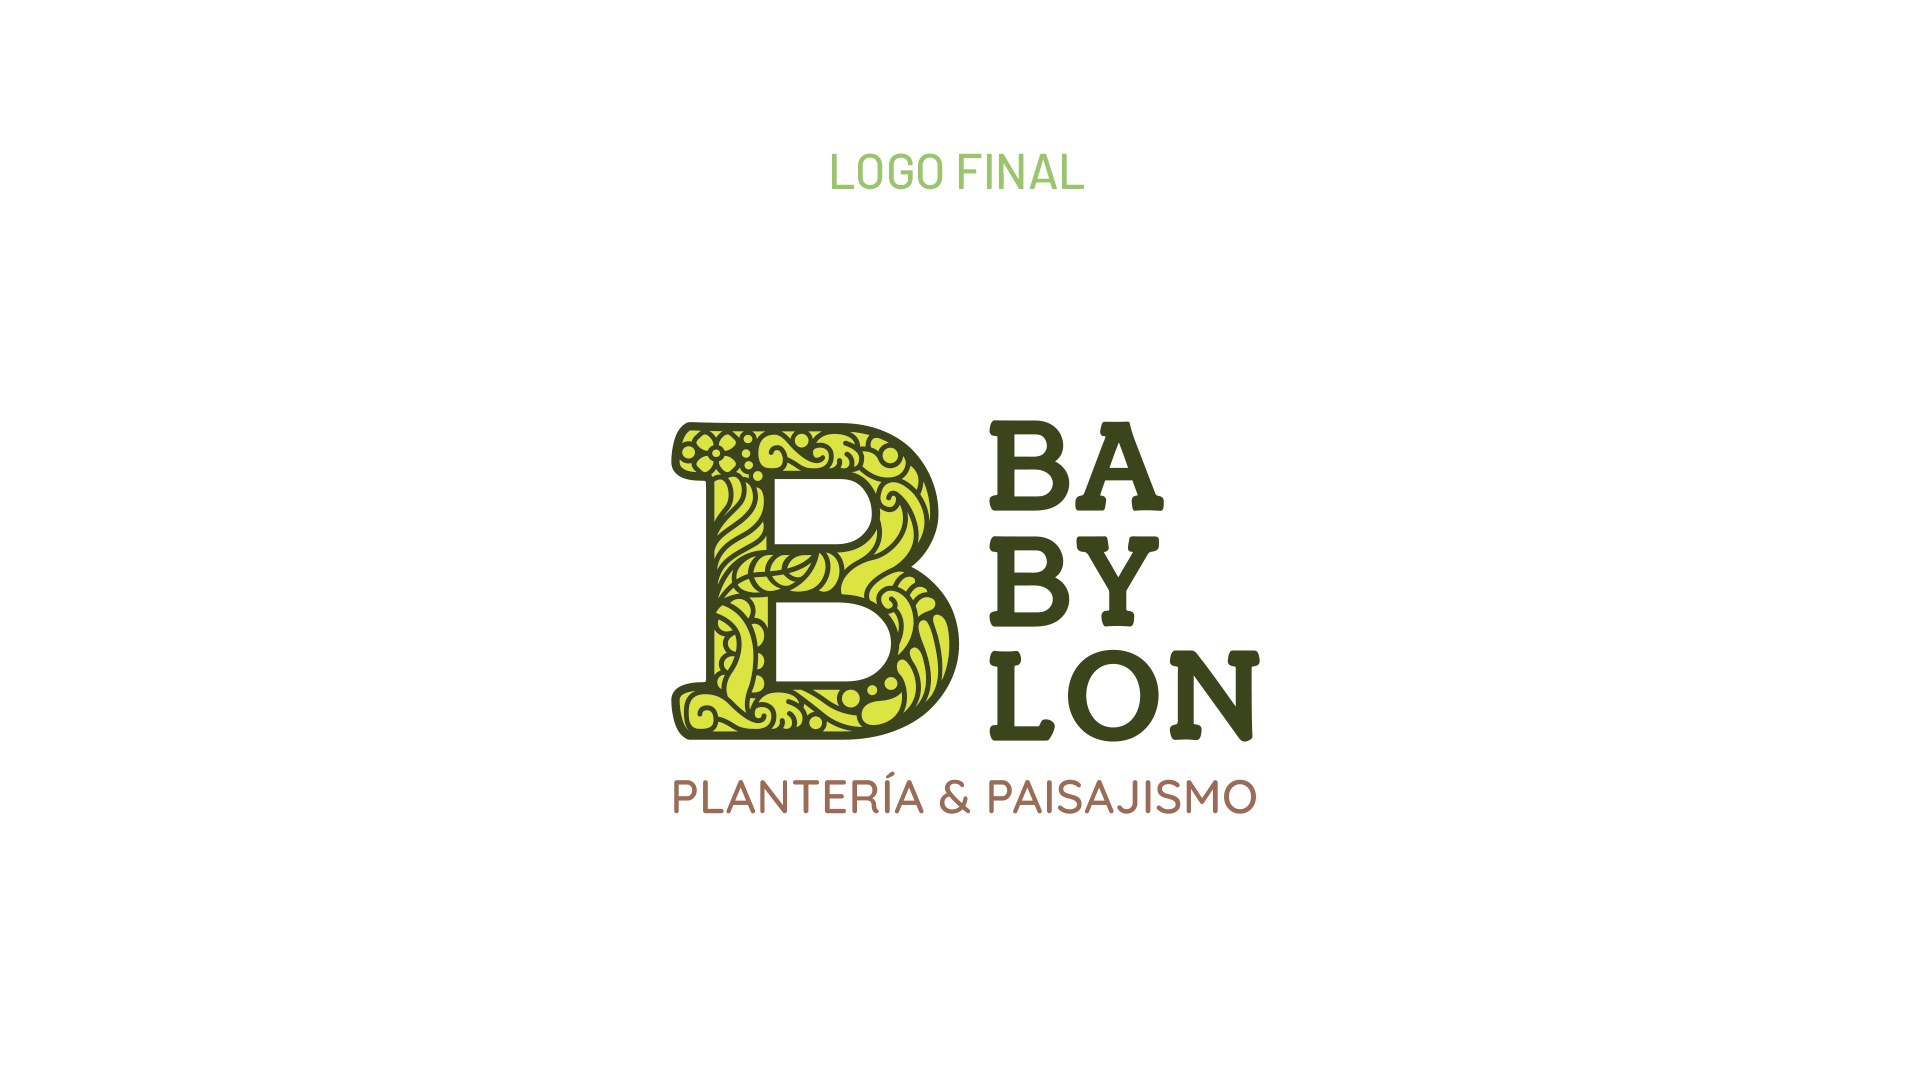 babylon-portafolio-identidad-1920x1080px-dopamine-brands-07